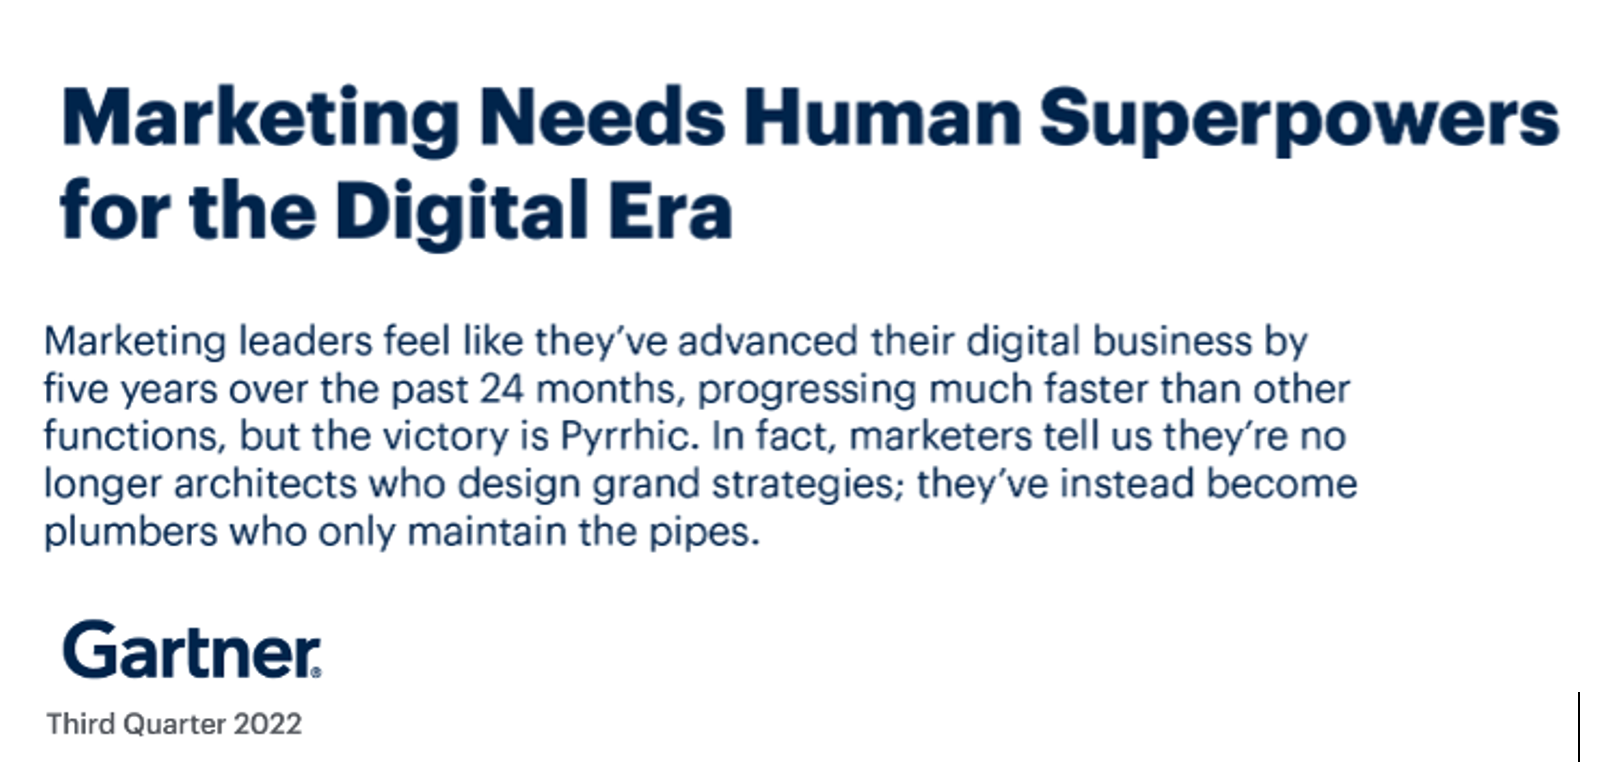 Quote Gartner: "Marketing Needs Human Superpowers for the Digital Era"